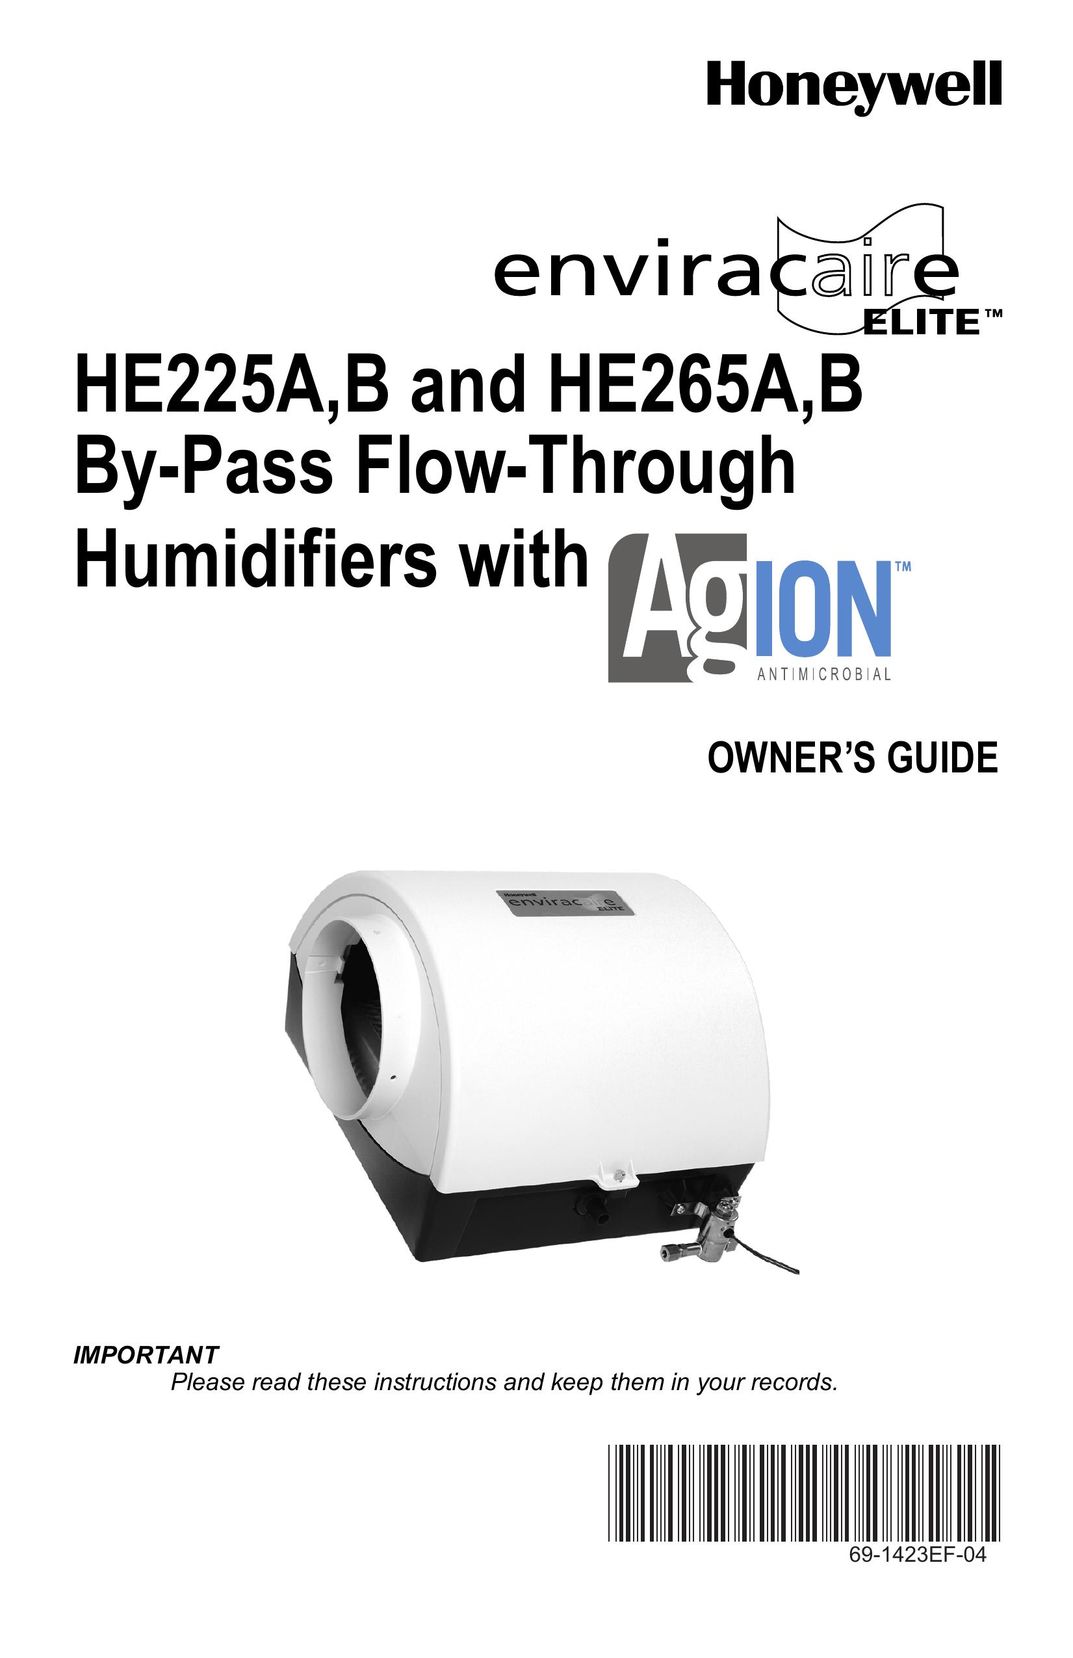 Honeywell HE265B Humidifier User Manual